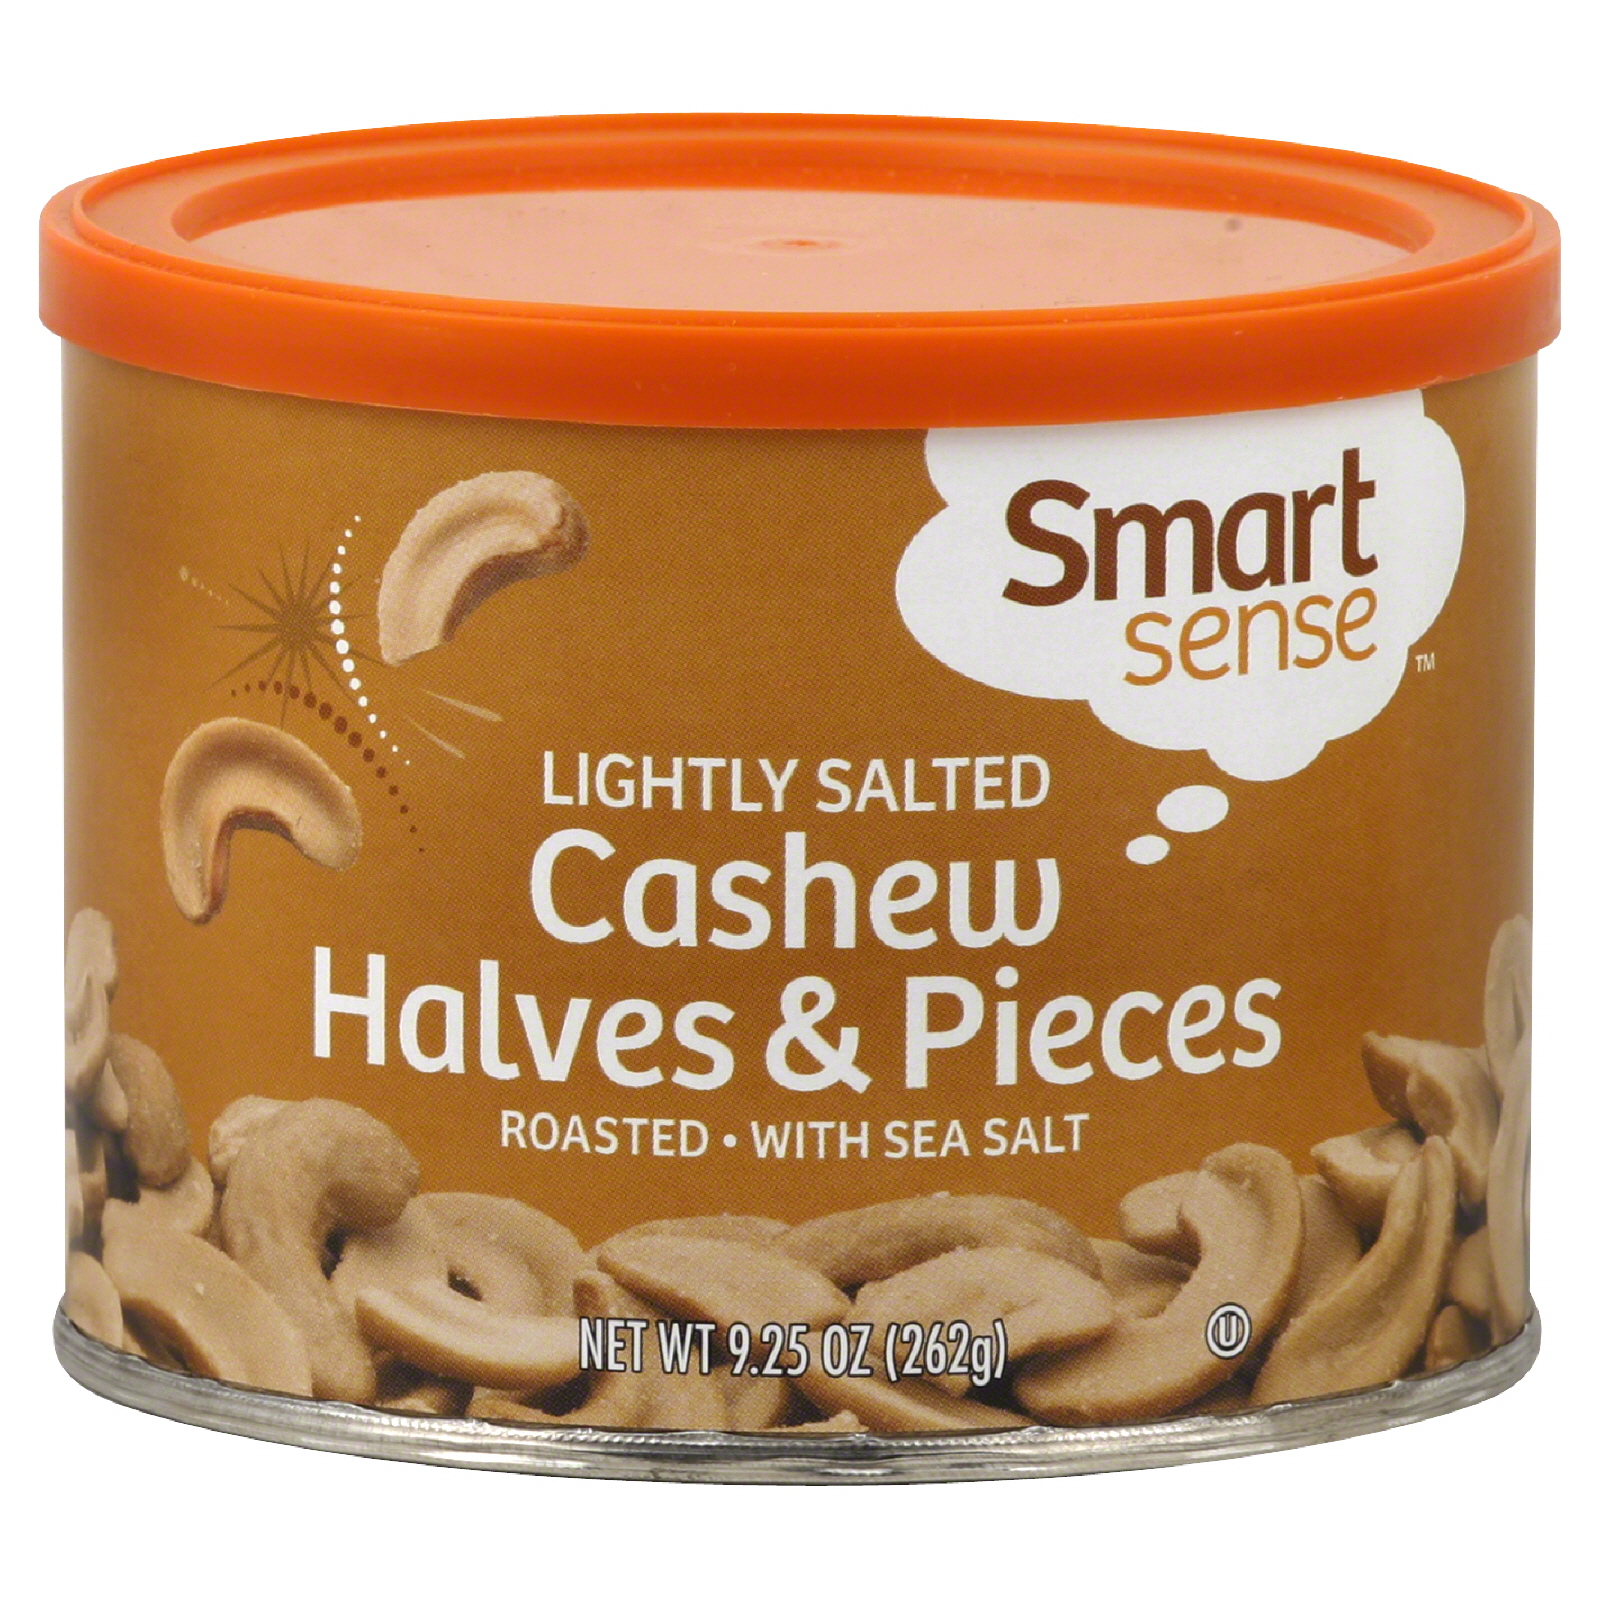 Smart Sense Cashew Halves & Pieces, Roasted, Lightly Salted 9.25 oz (262 g)